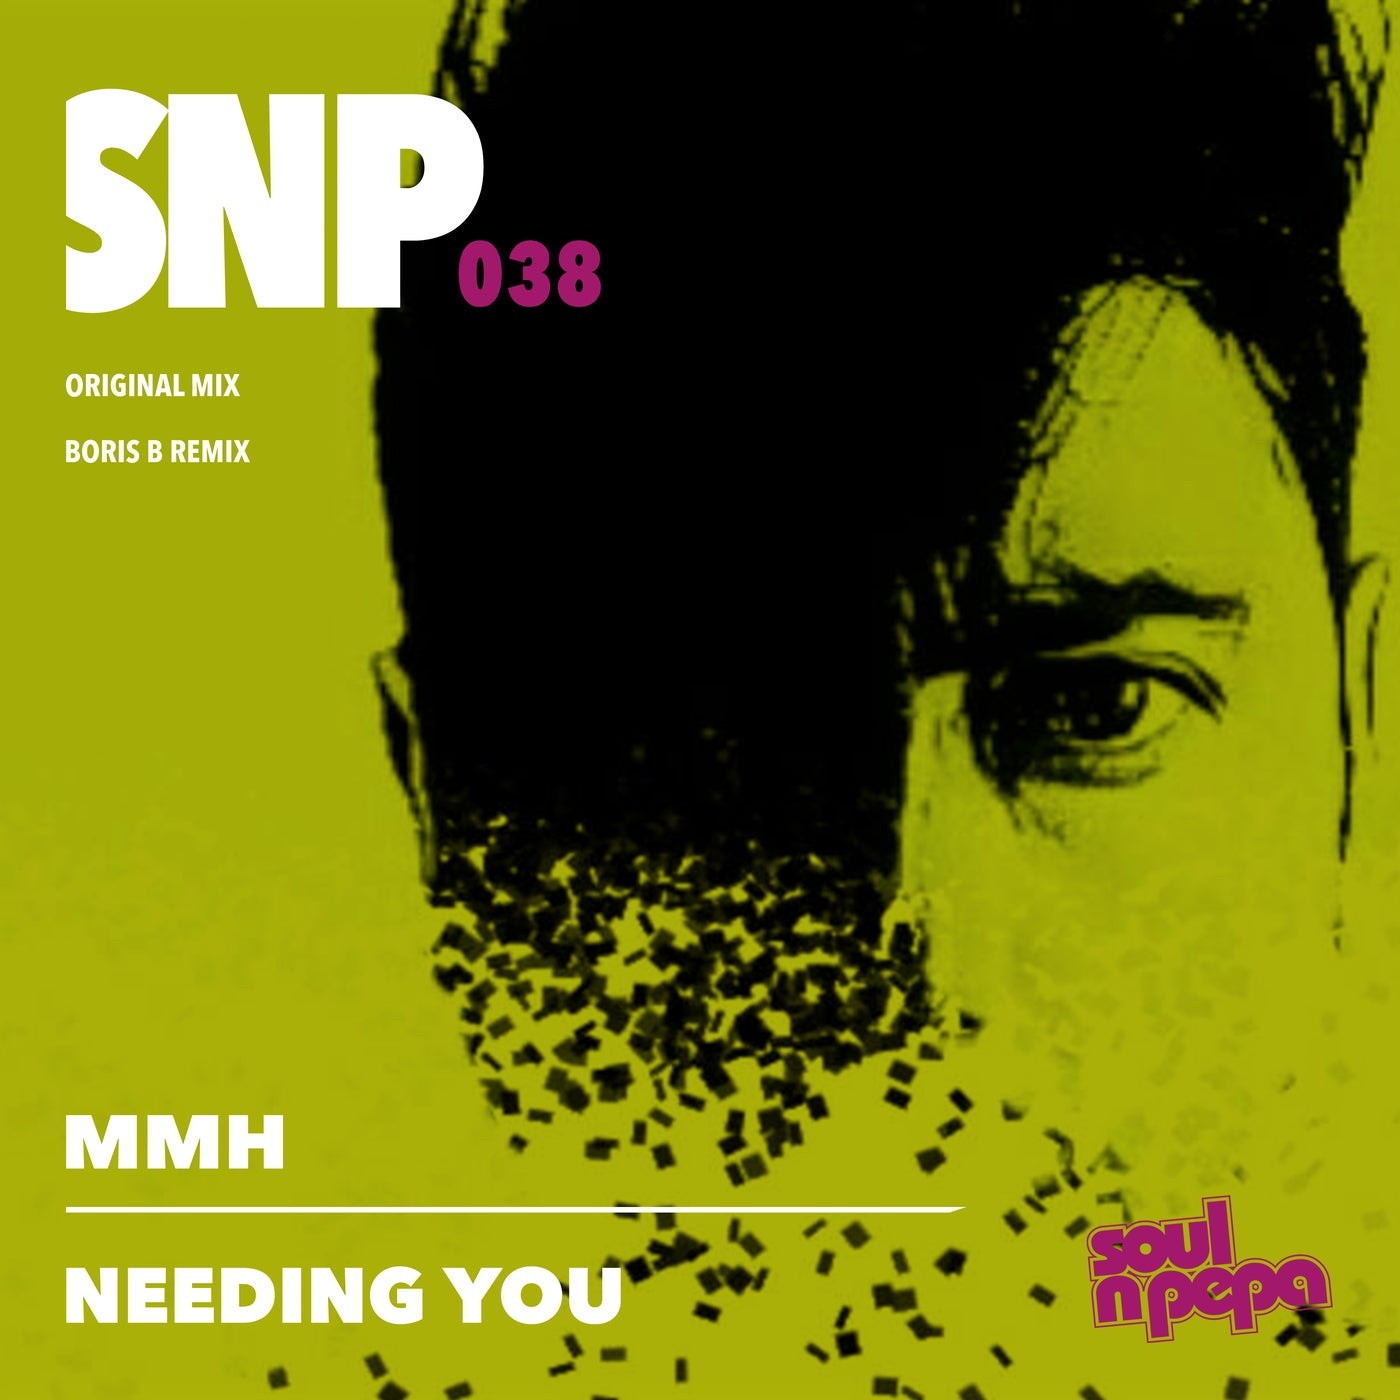 MMH - Needing You [S0ULNPEPA038]